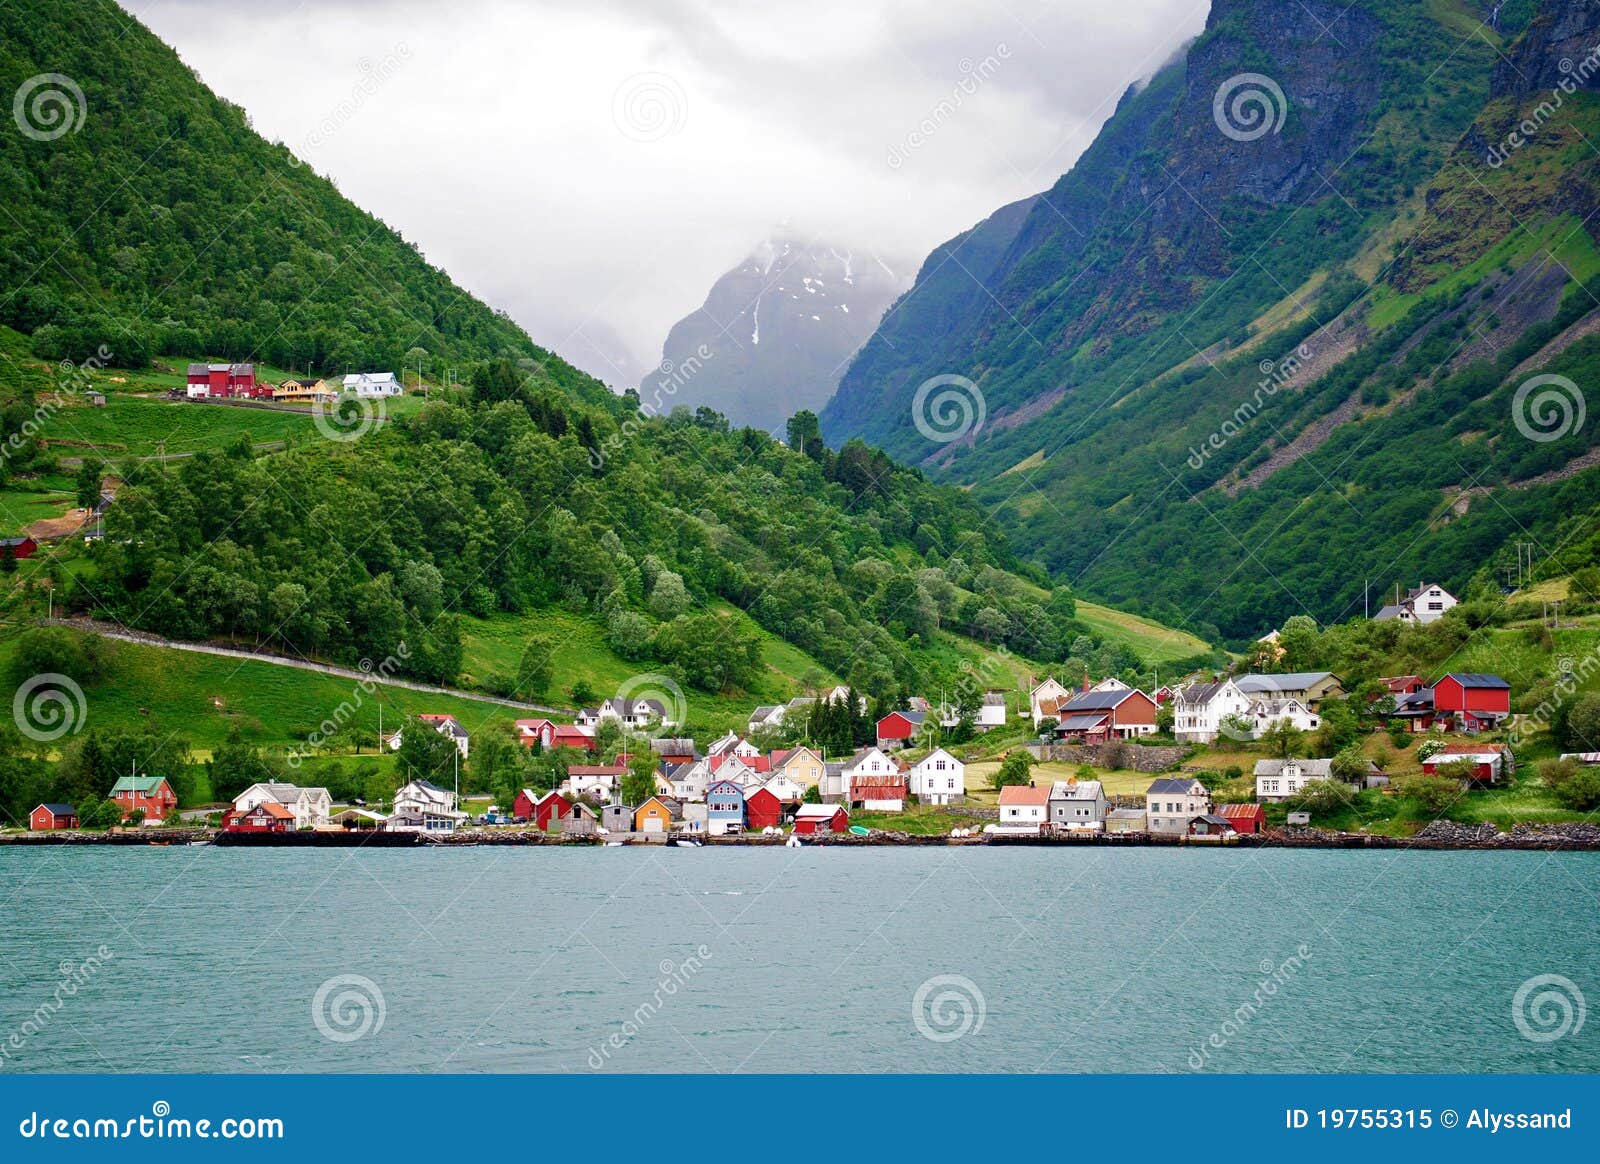 fjords in norway